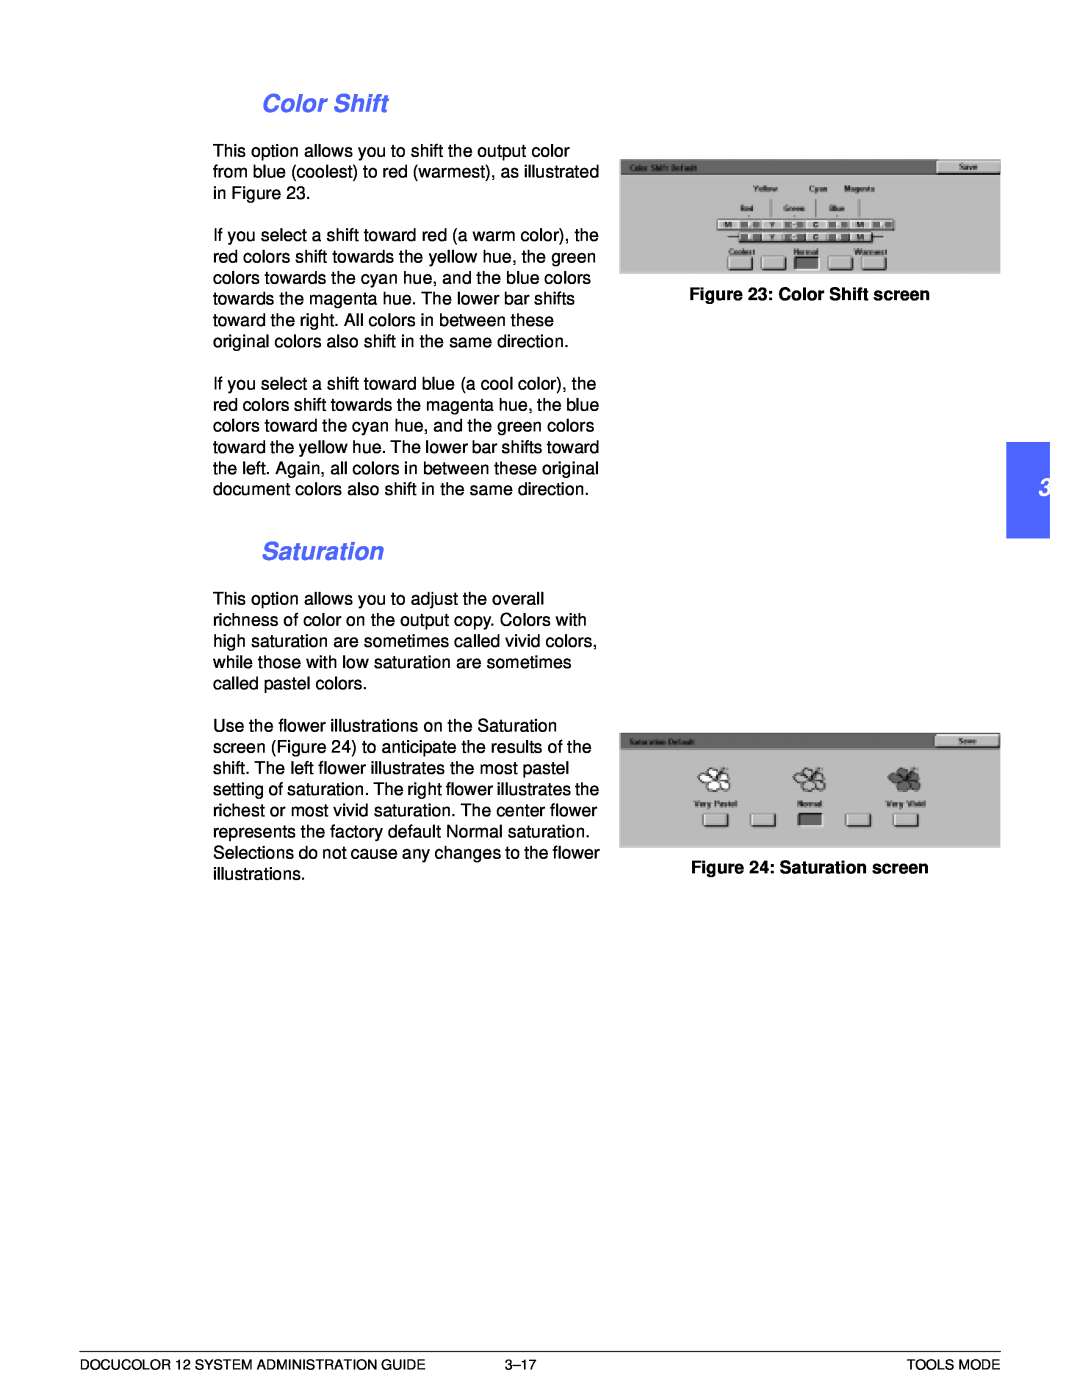 Xerox a2 manual 1 2 3 4 5 6 7, Color Shift screen, Saturation screen 